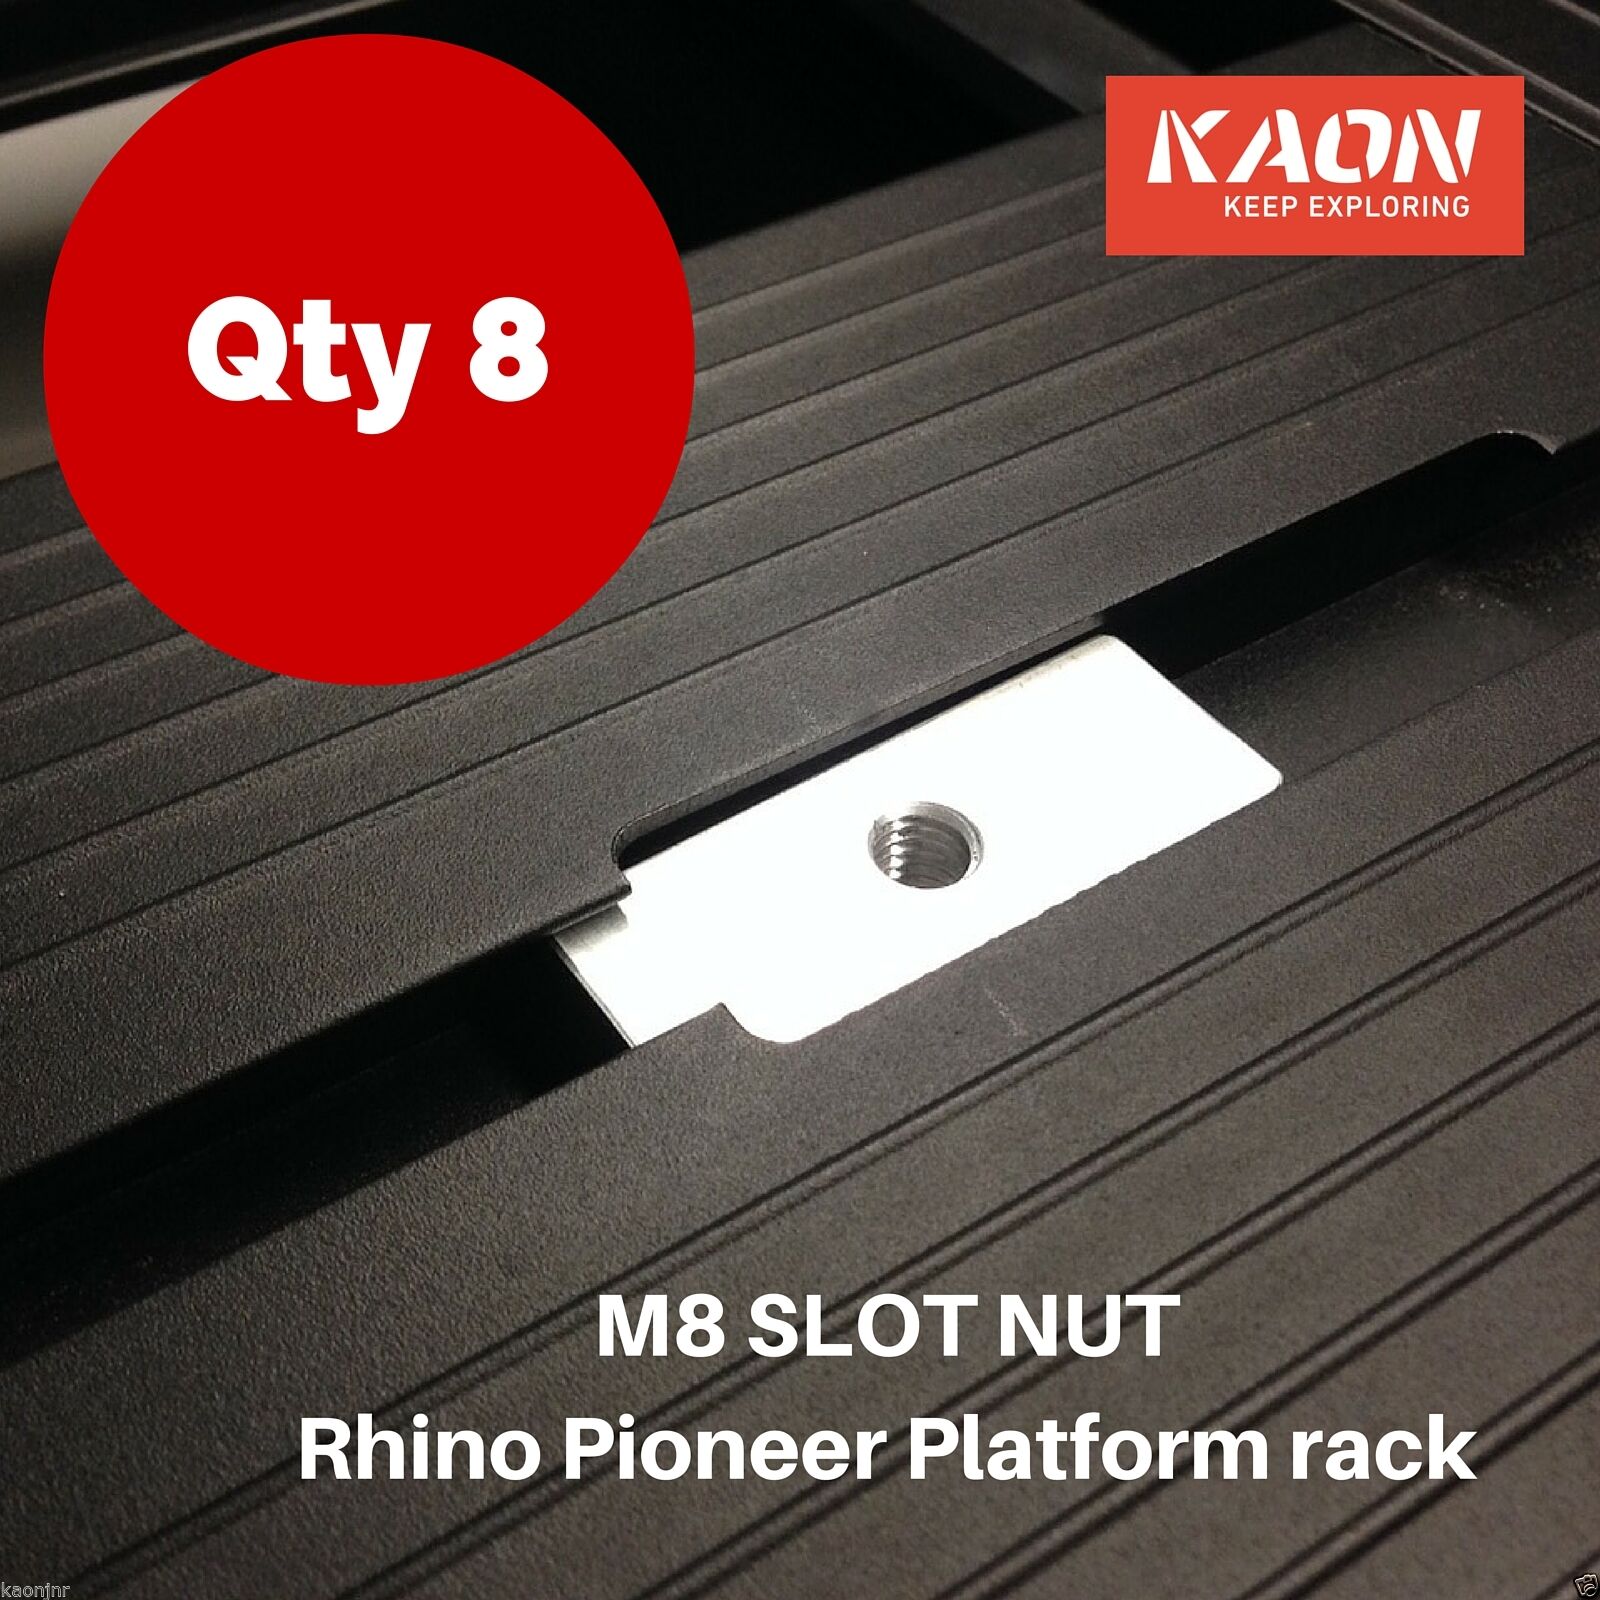 M8 Slot Nut x 8 Rhino Pioneer Platform Rack 6061 Aluminum Roof Awning